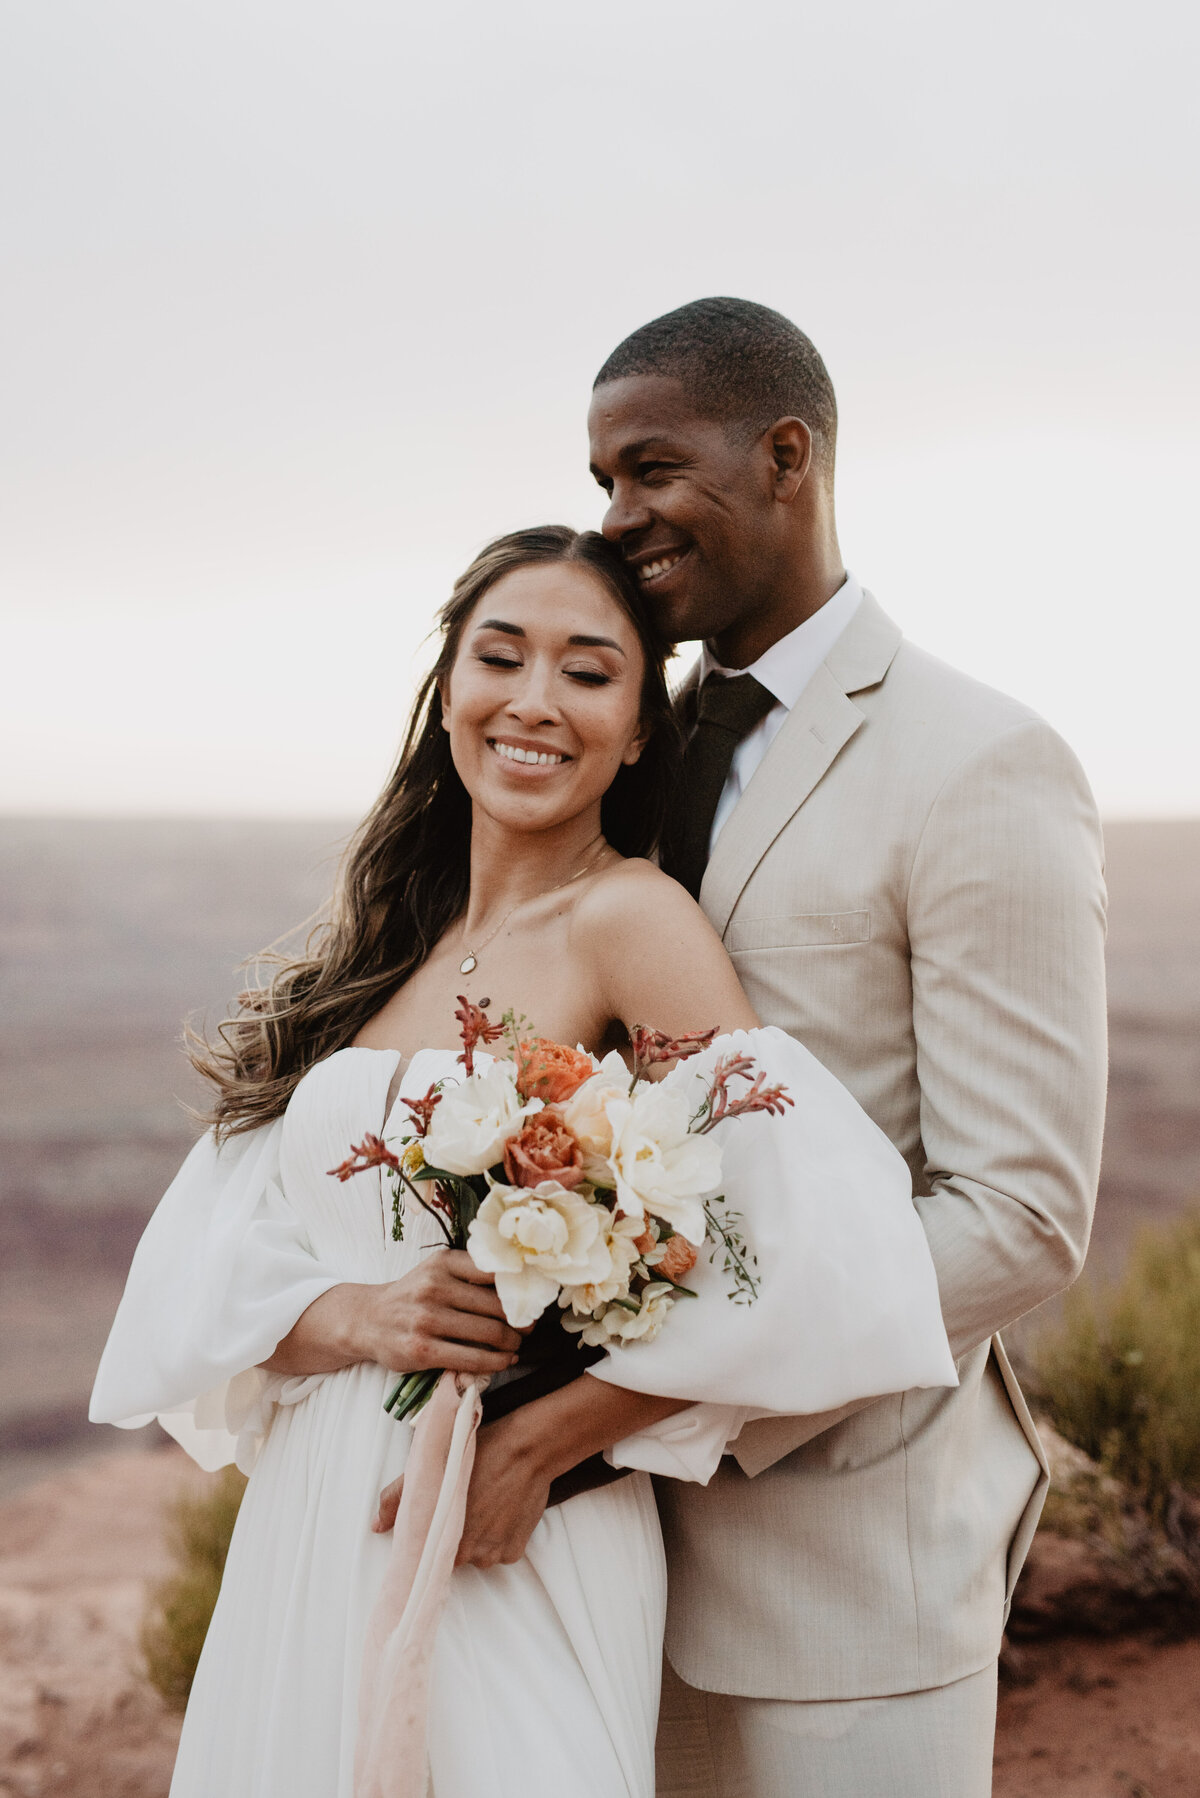 Utah Elopement Photographer captures couple smiling